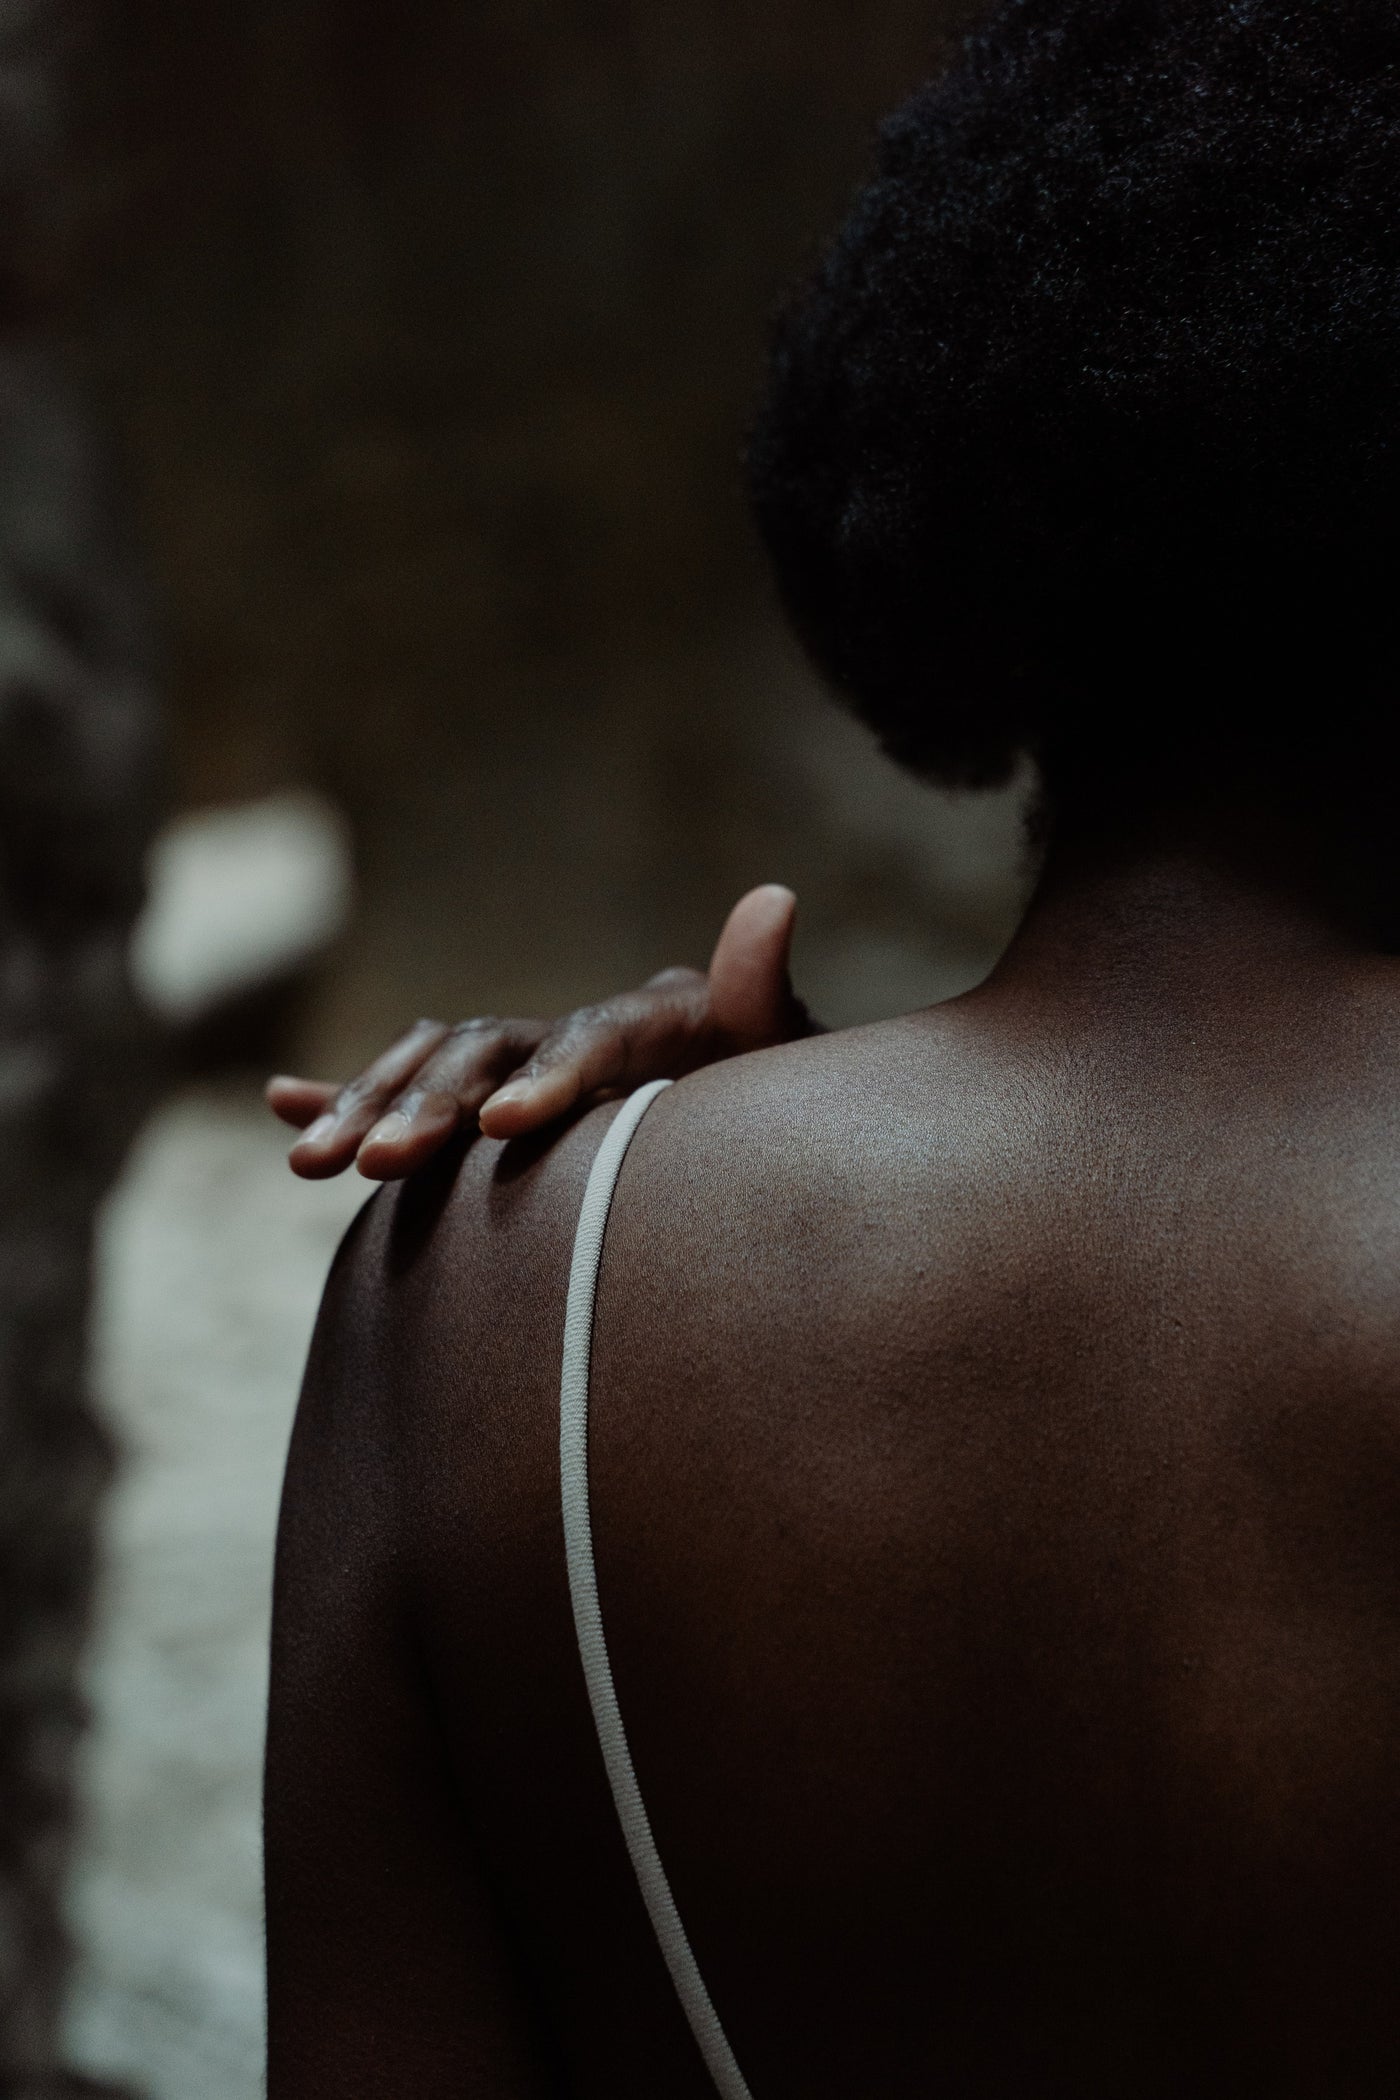 Dark skinned black woman's back